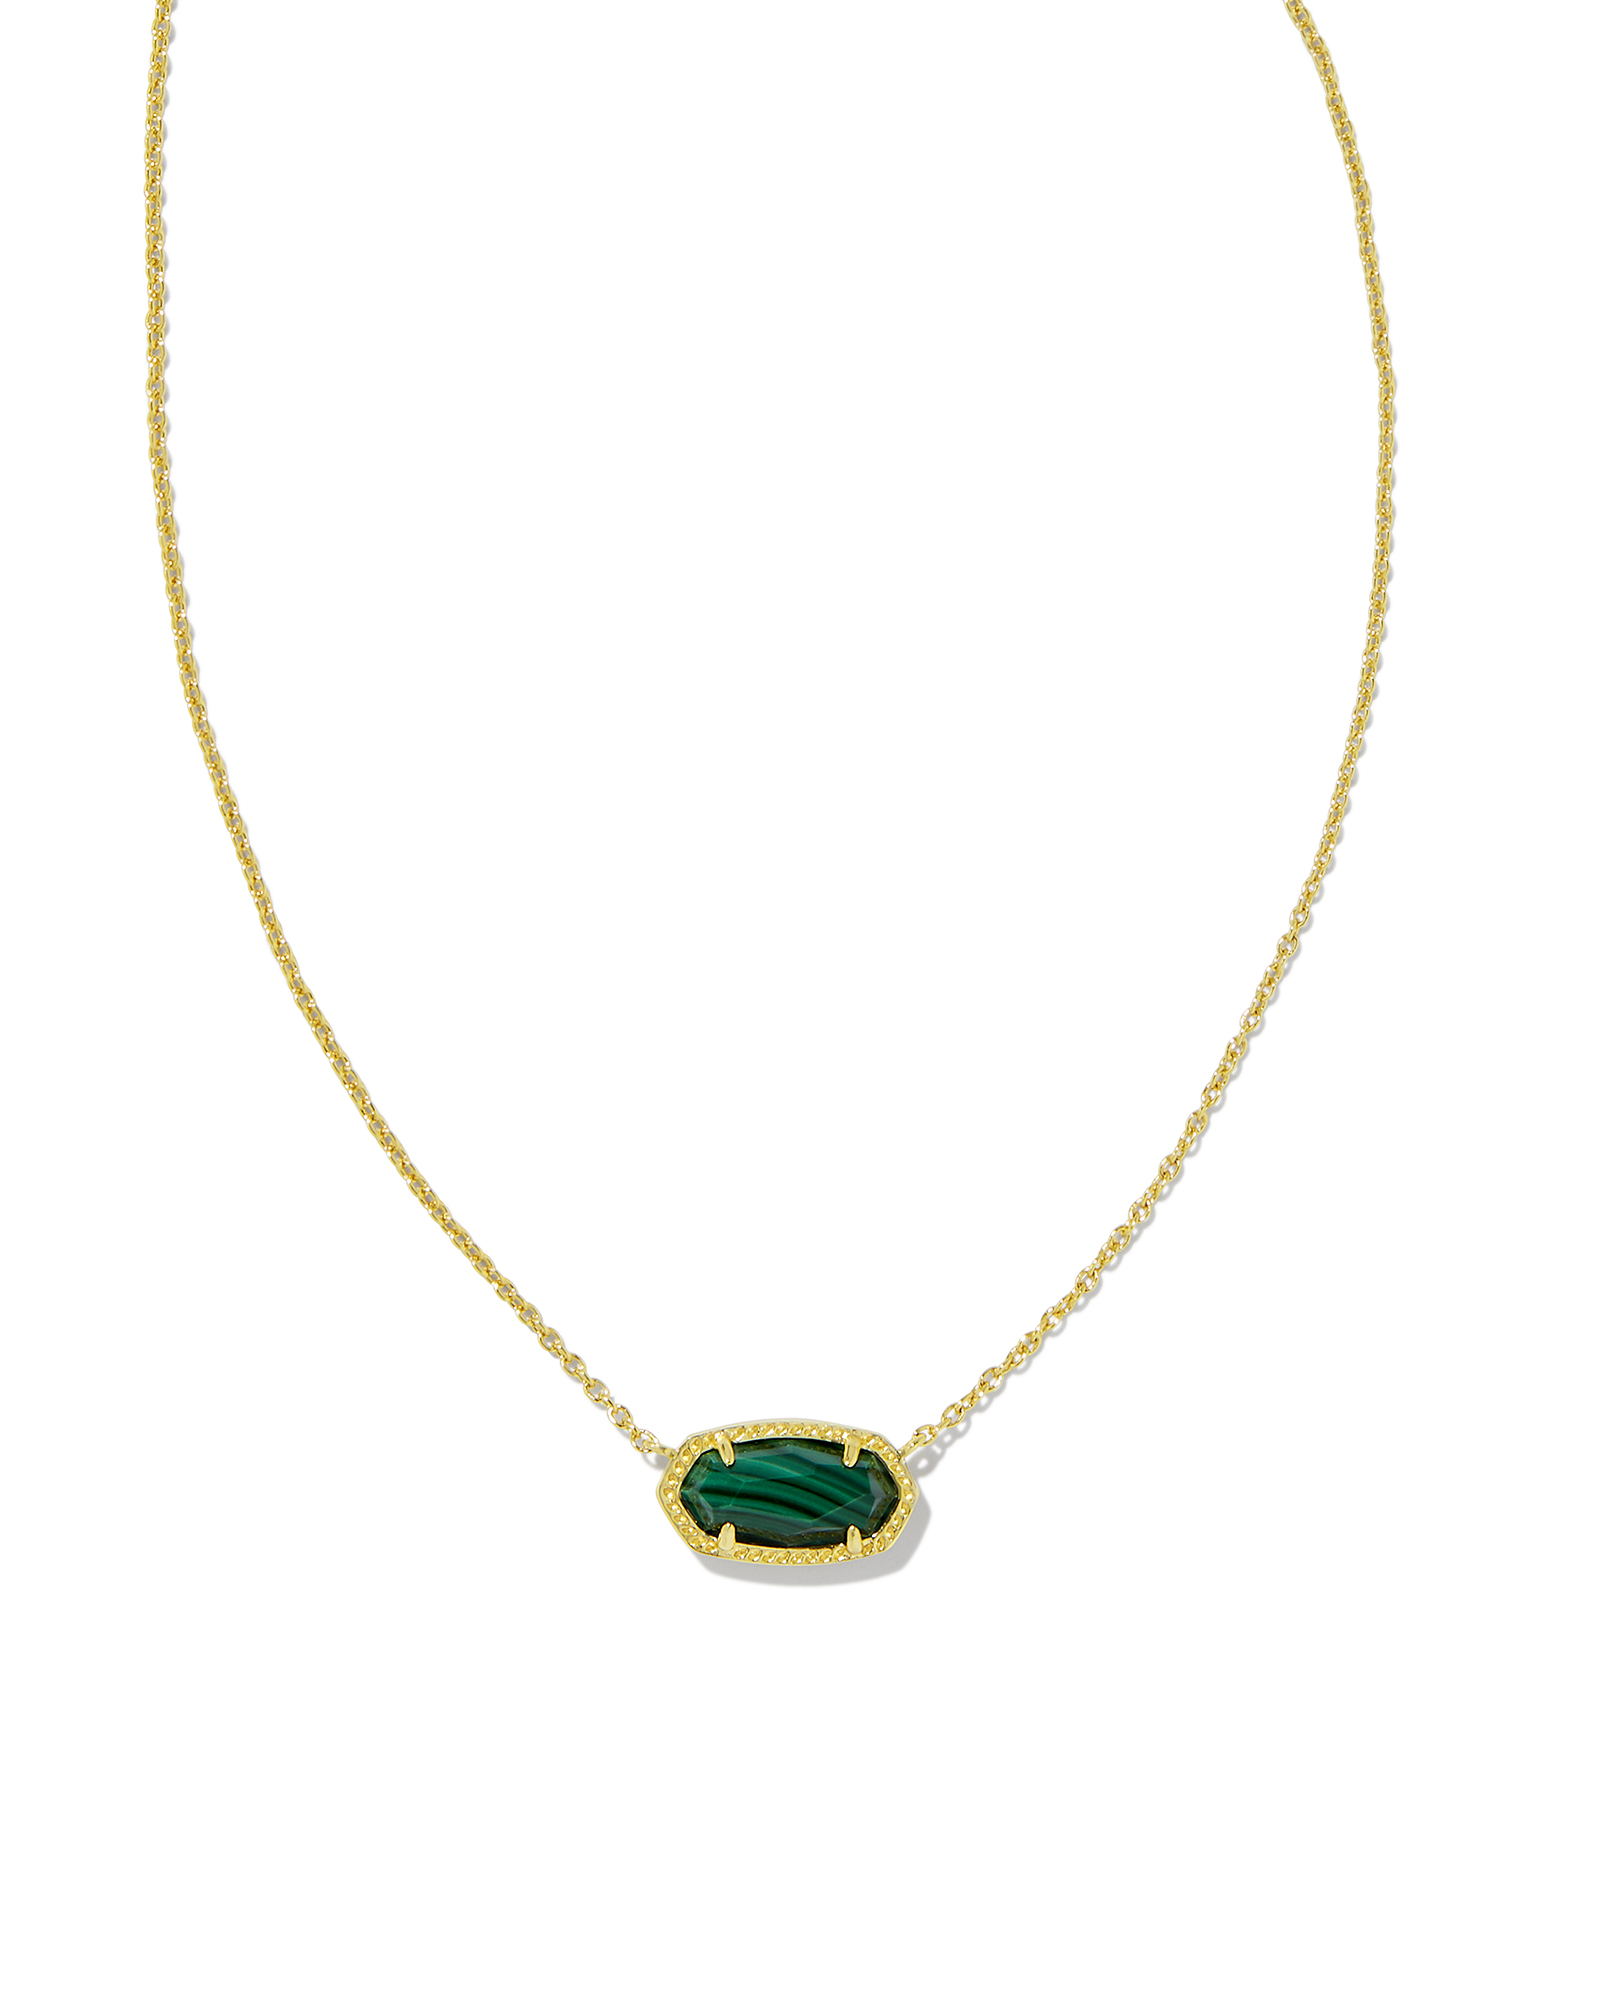 Elisa Gold Pendant Necklace in Green Malachite | Kendra Scott